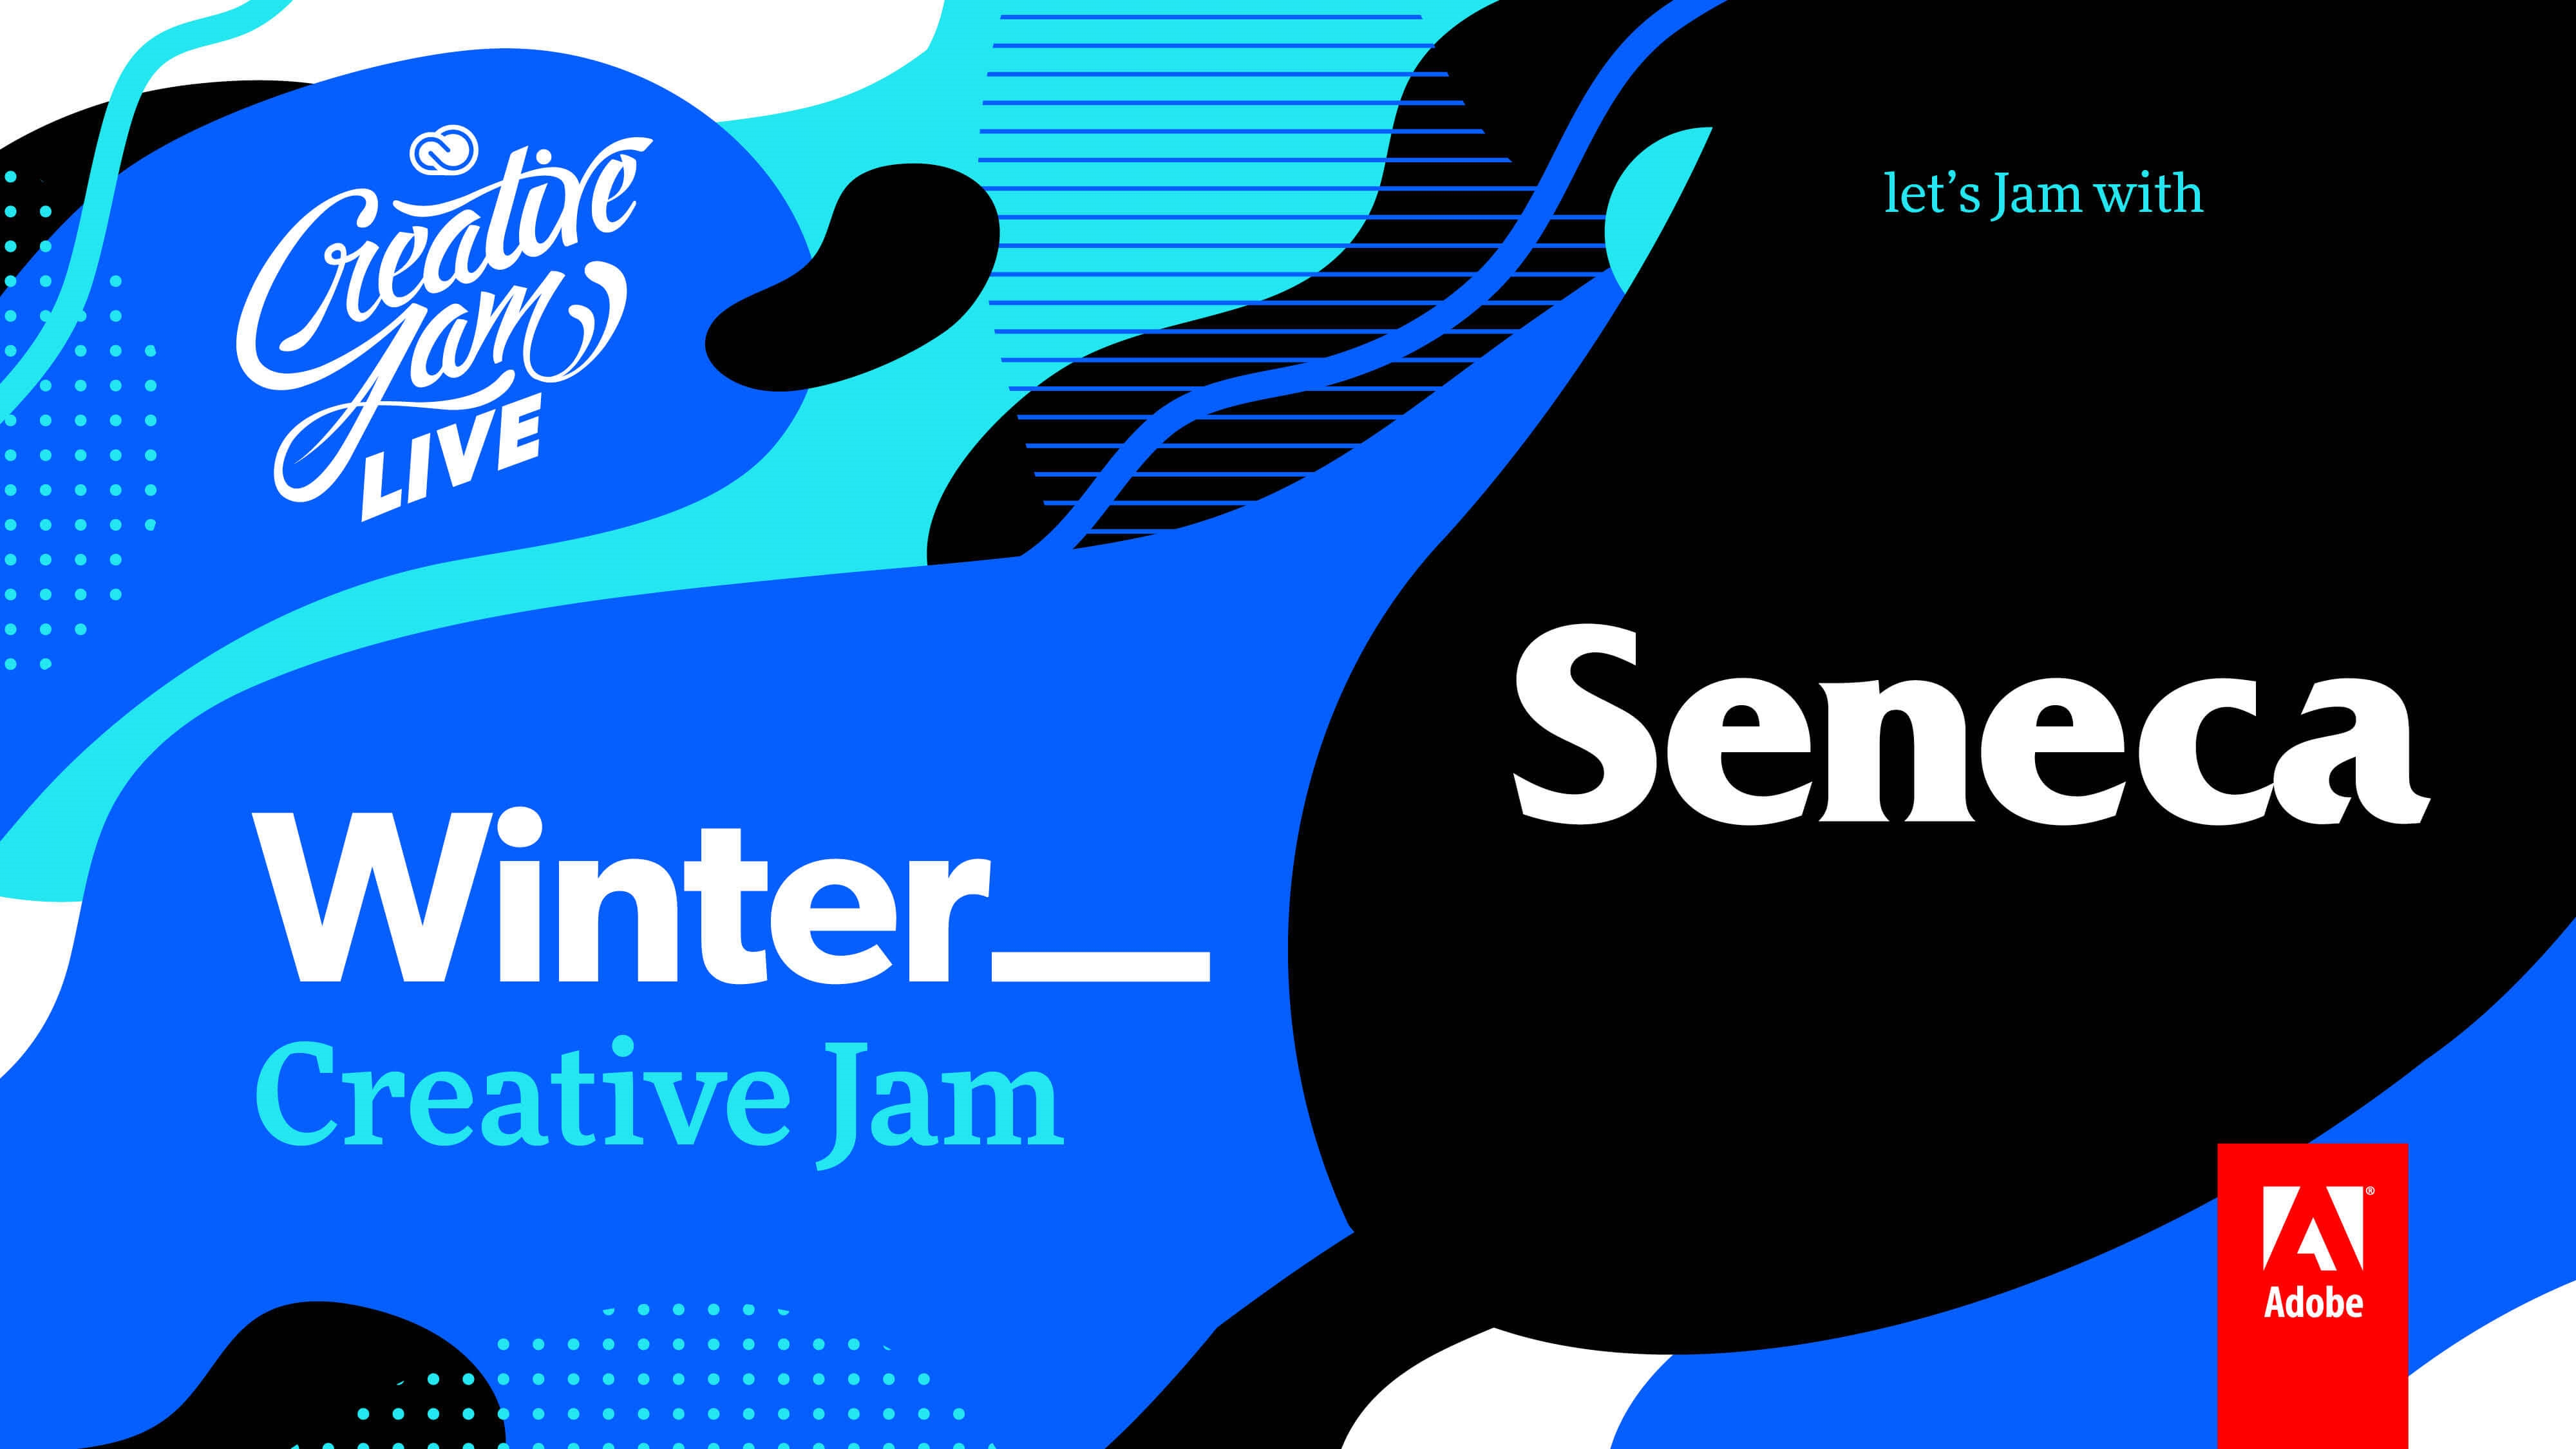 The Adobe Creative Jam for Faculty at Seneca banner